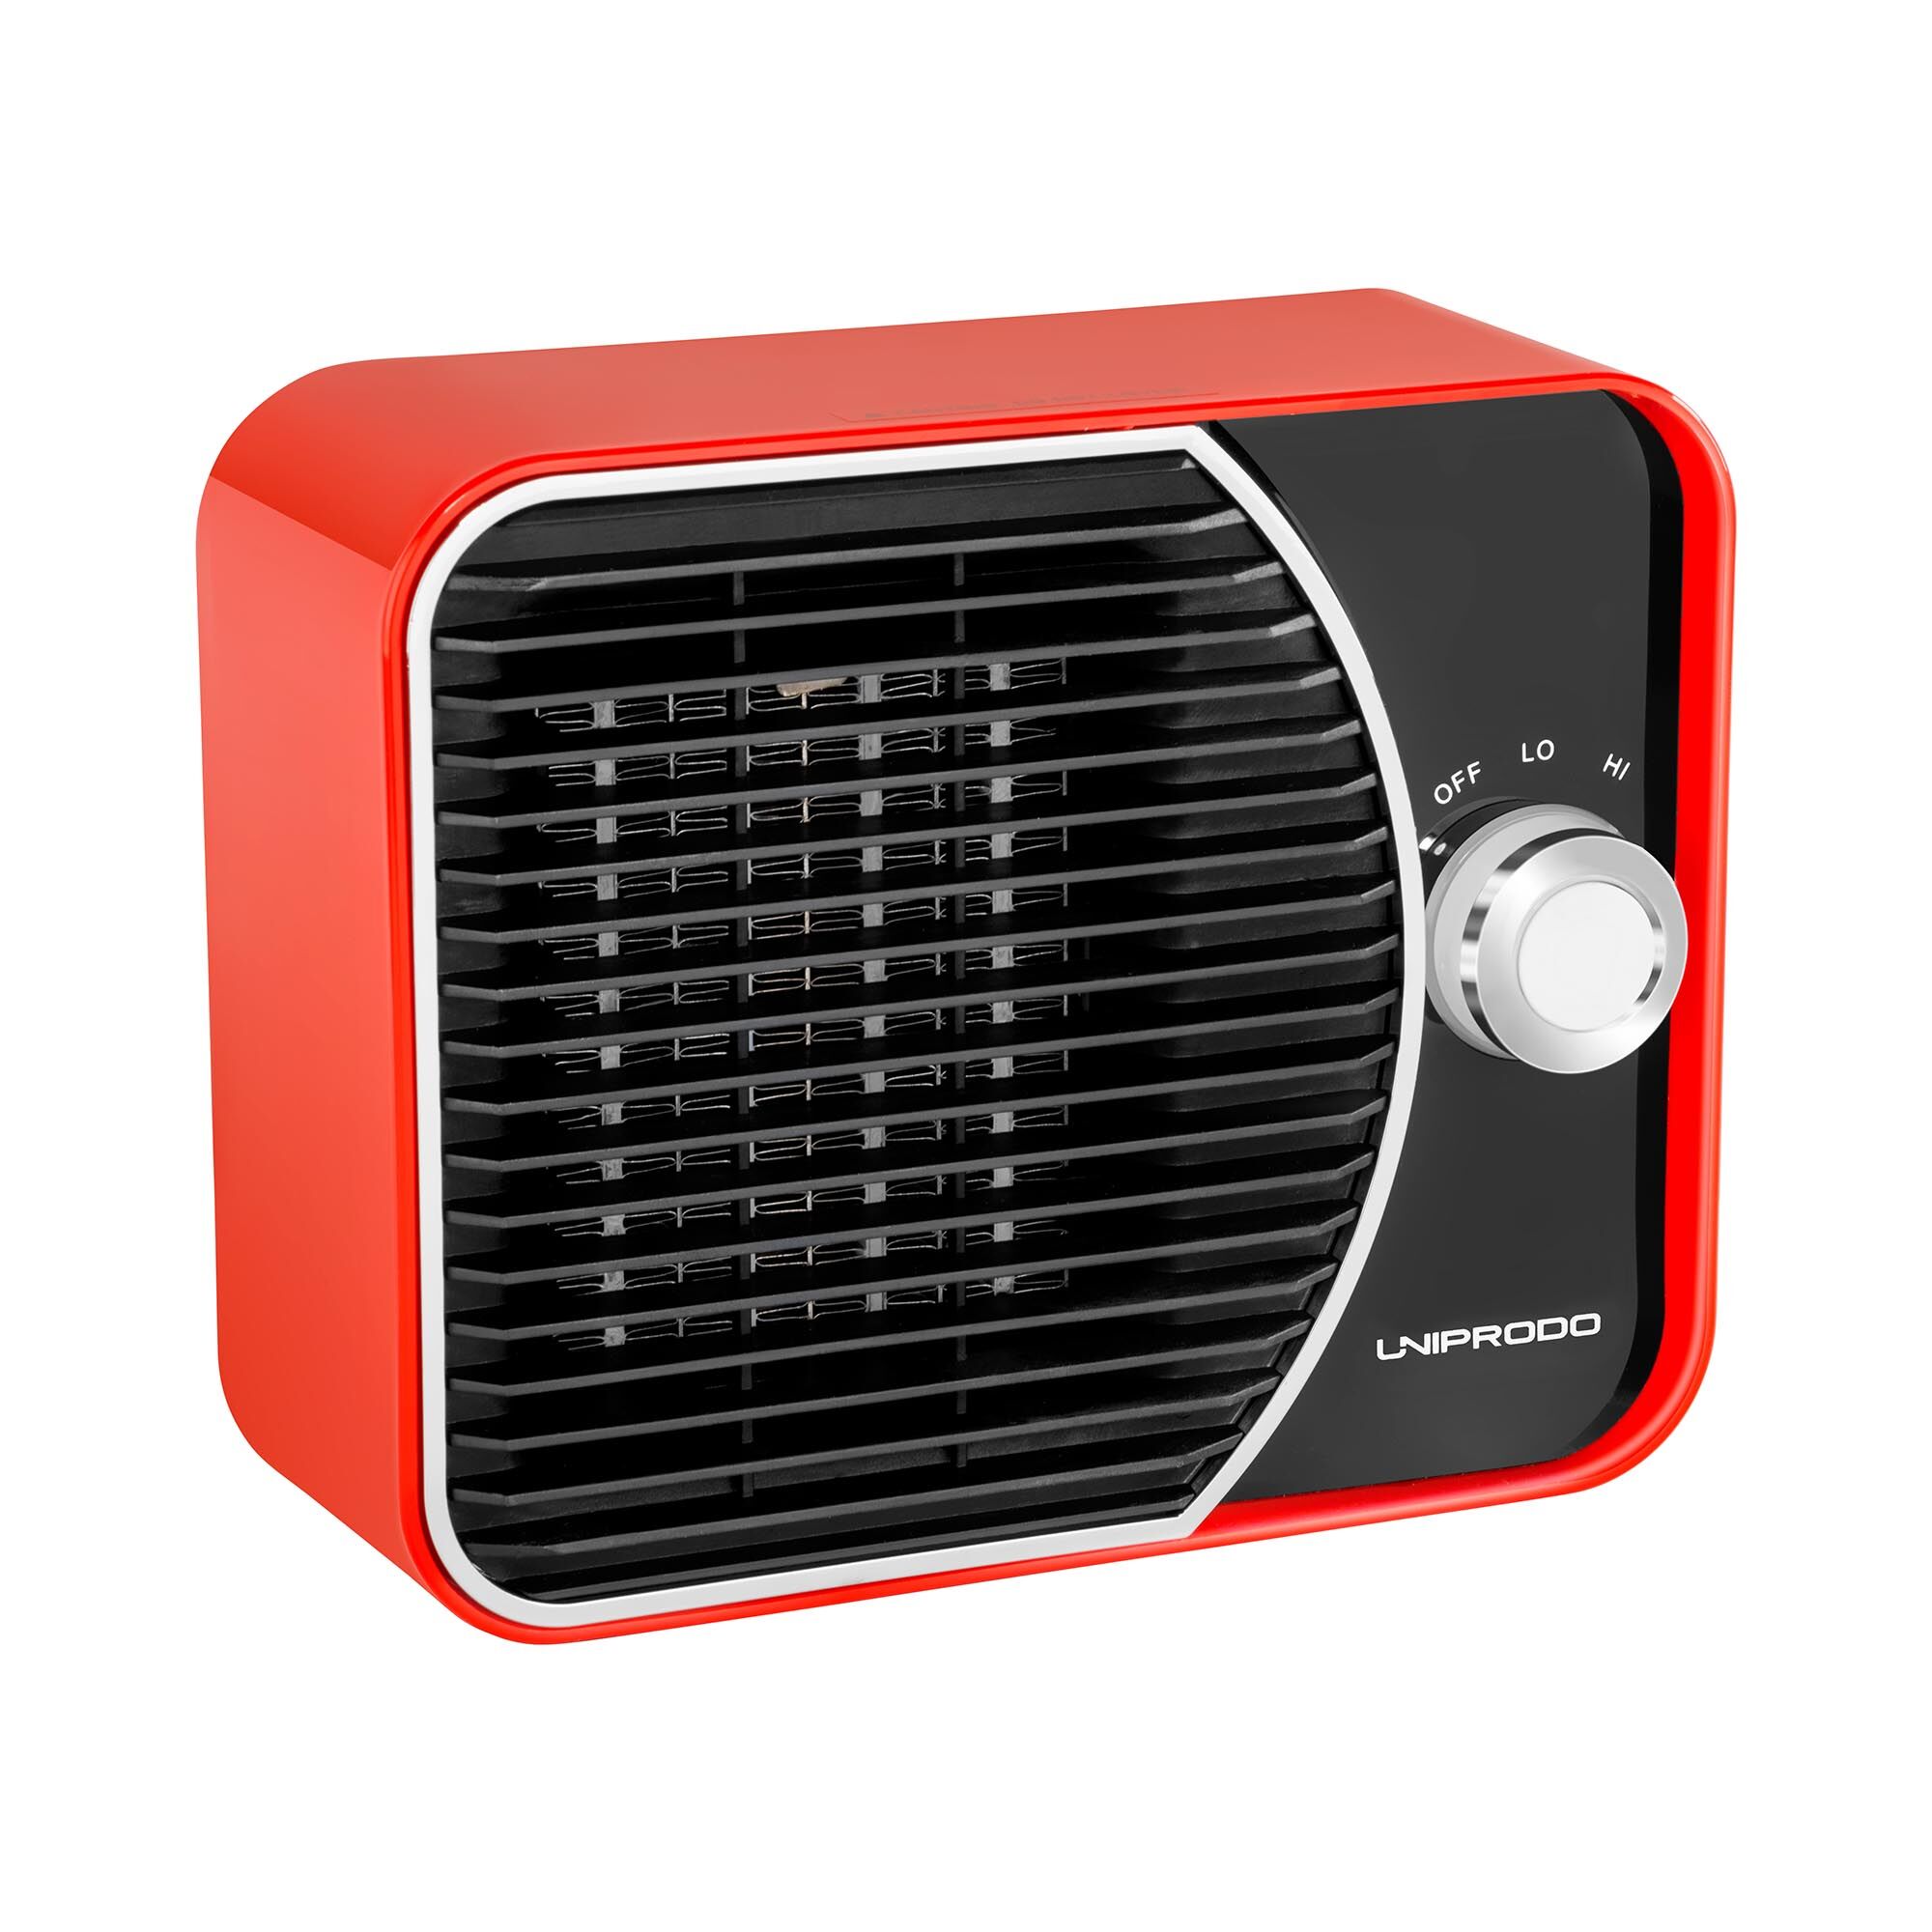 Uniprodo Small Fan Heater - up to 128 °C - 965 to 1,298 W UNI_HEATER_01